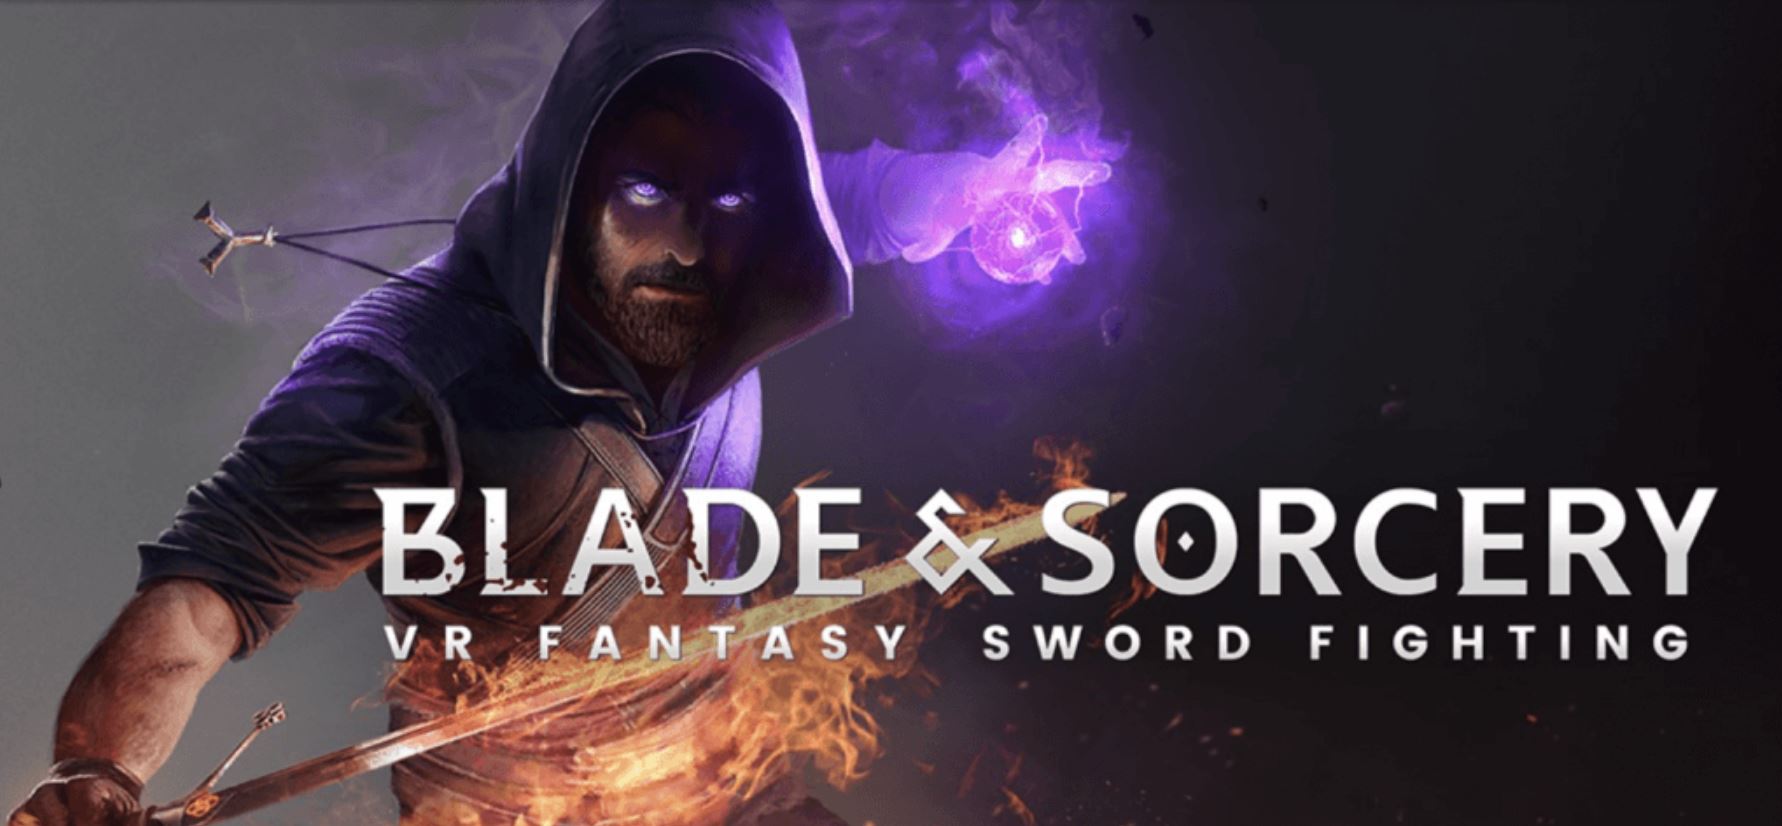 Badass magician VR game Blade & Sorcery